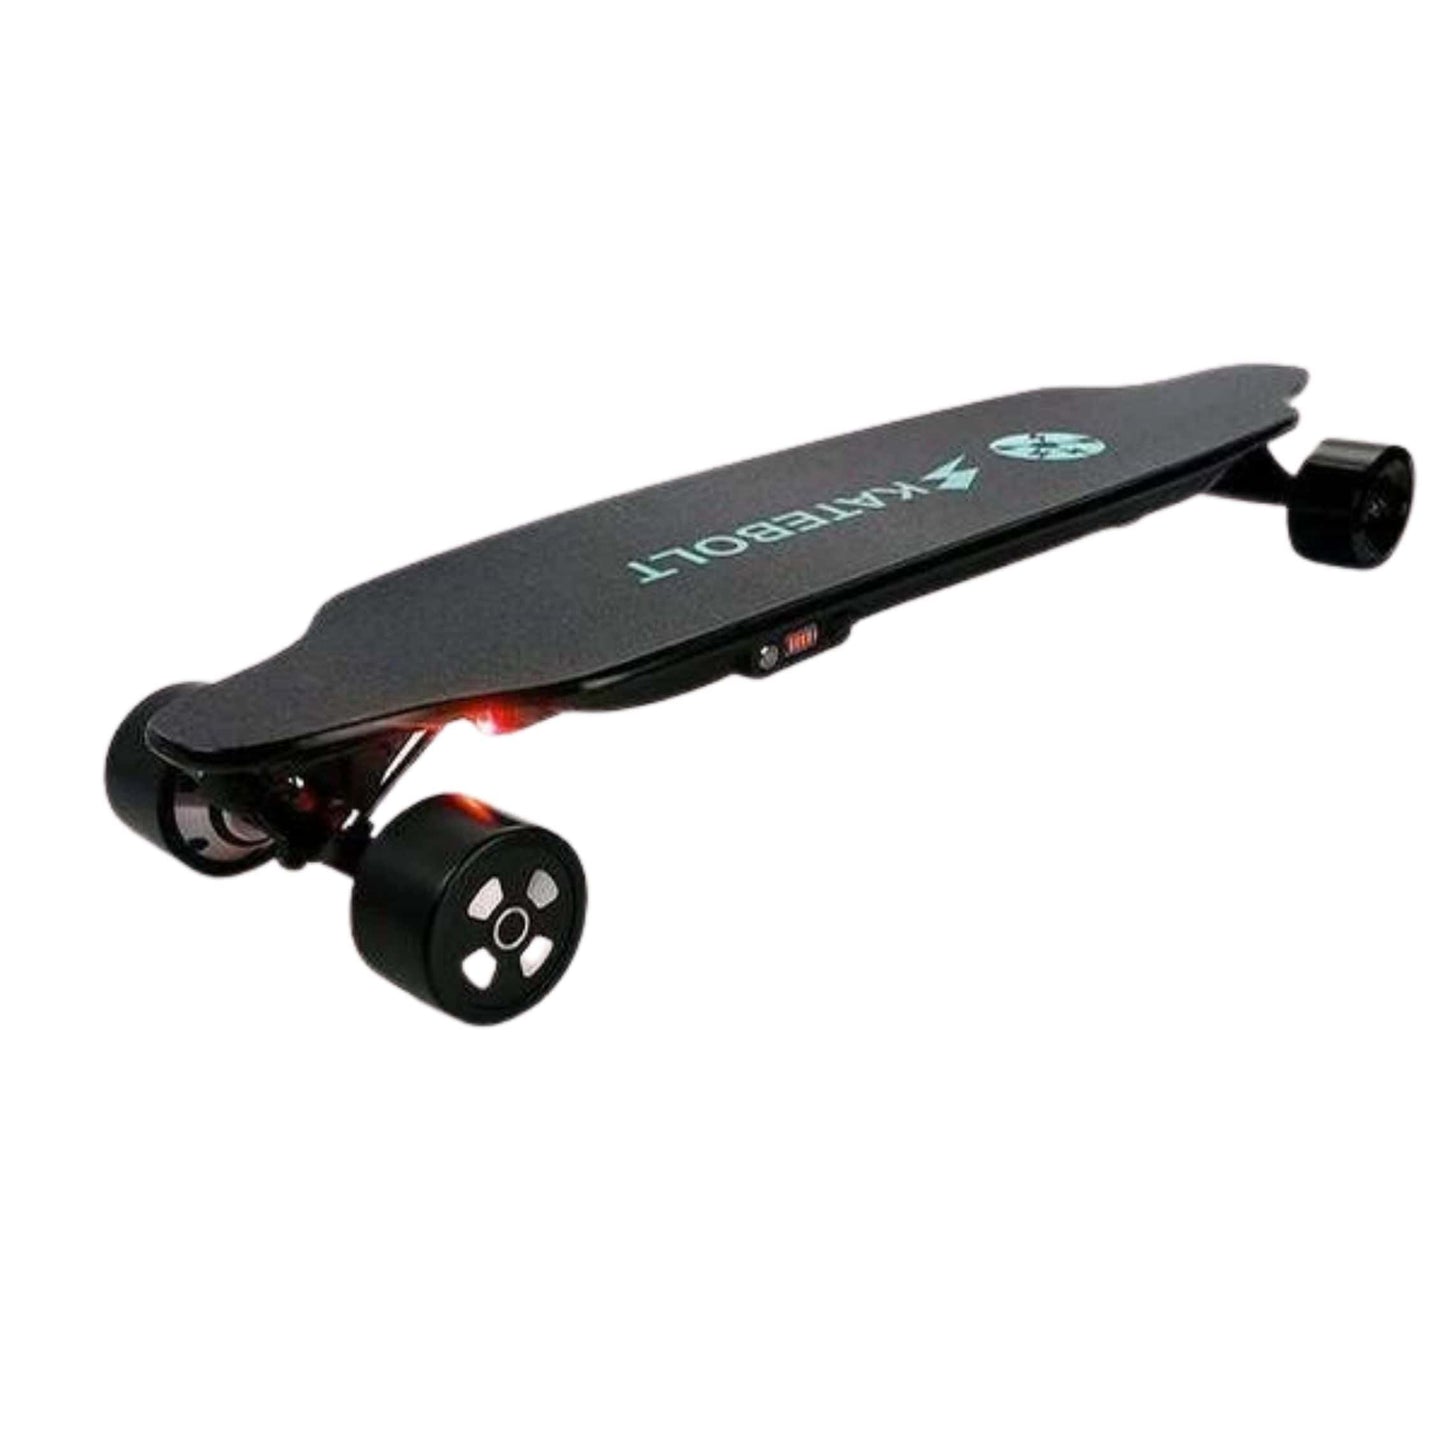 Skatebolt Tornado Pro A Electric Skateboard